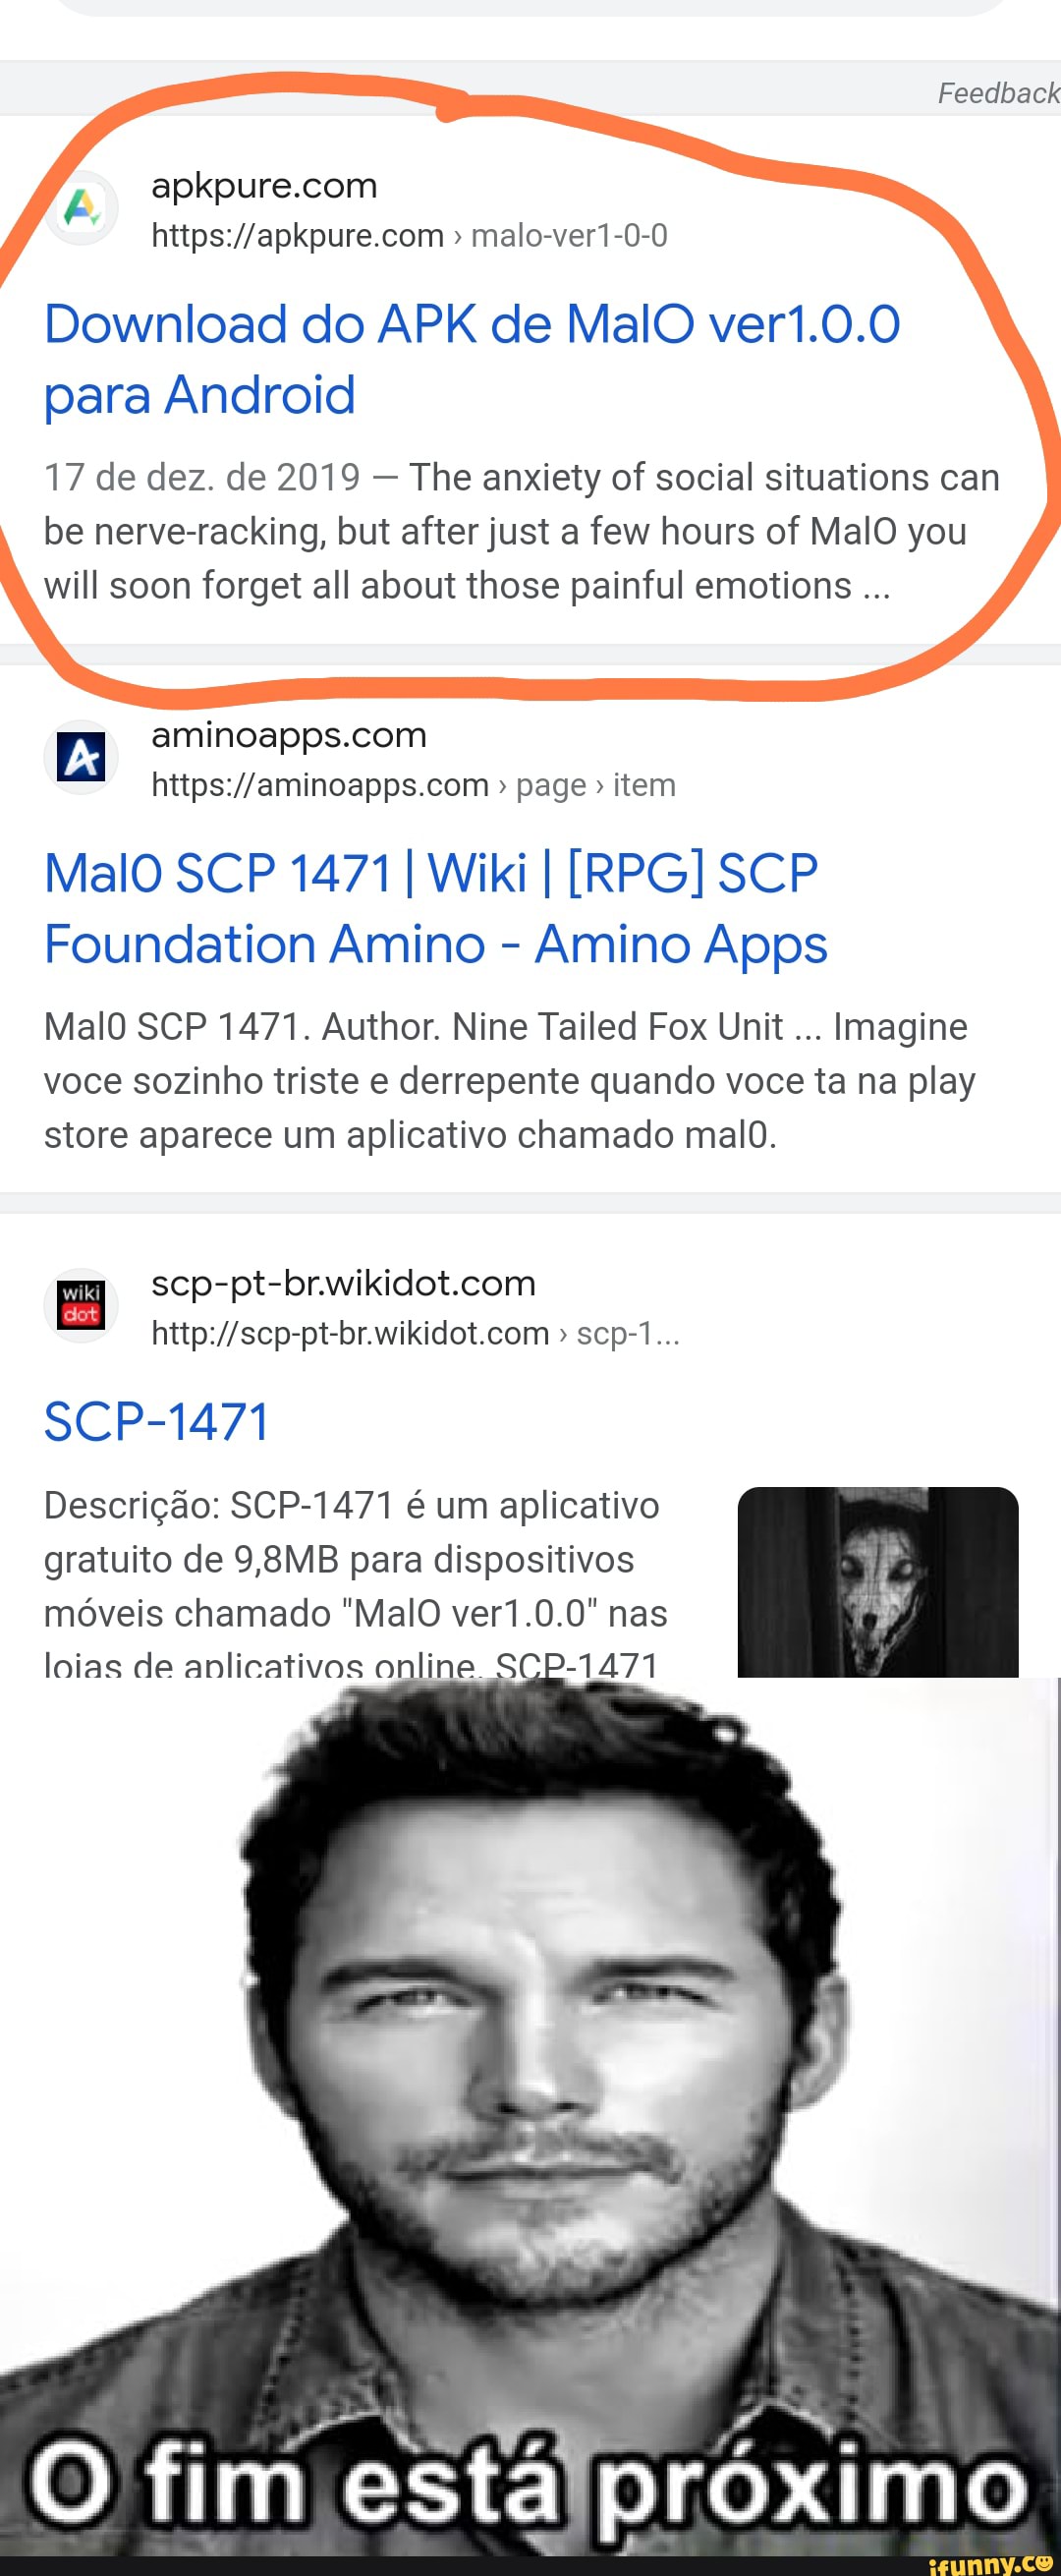 malo-ver1-0-0 Download do APK de MalO ver1.0.0 para Android 17 de dez.